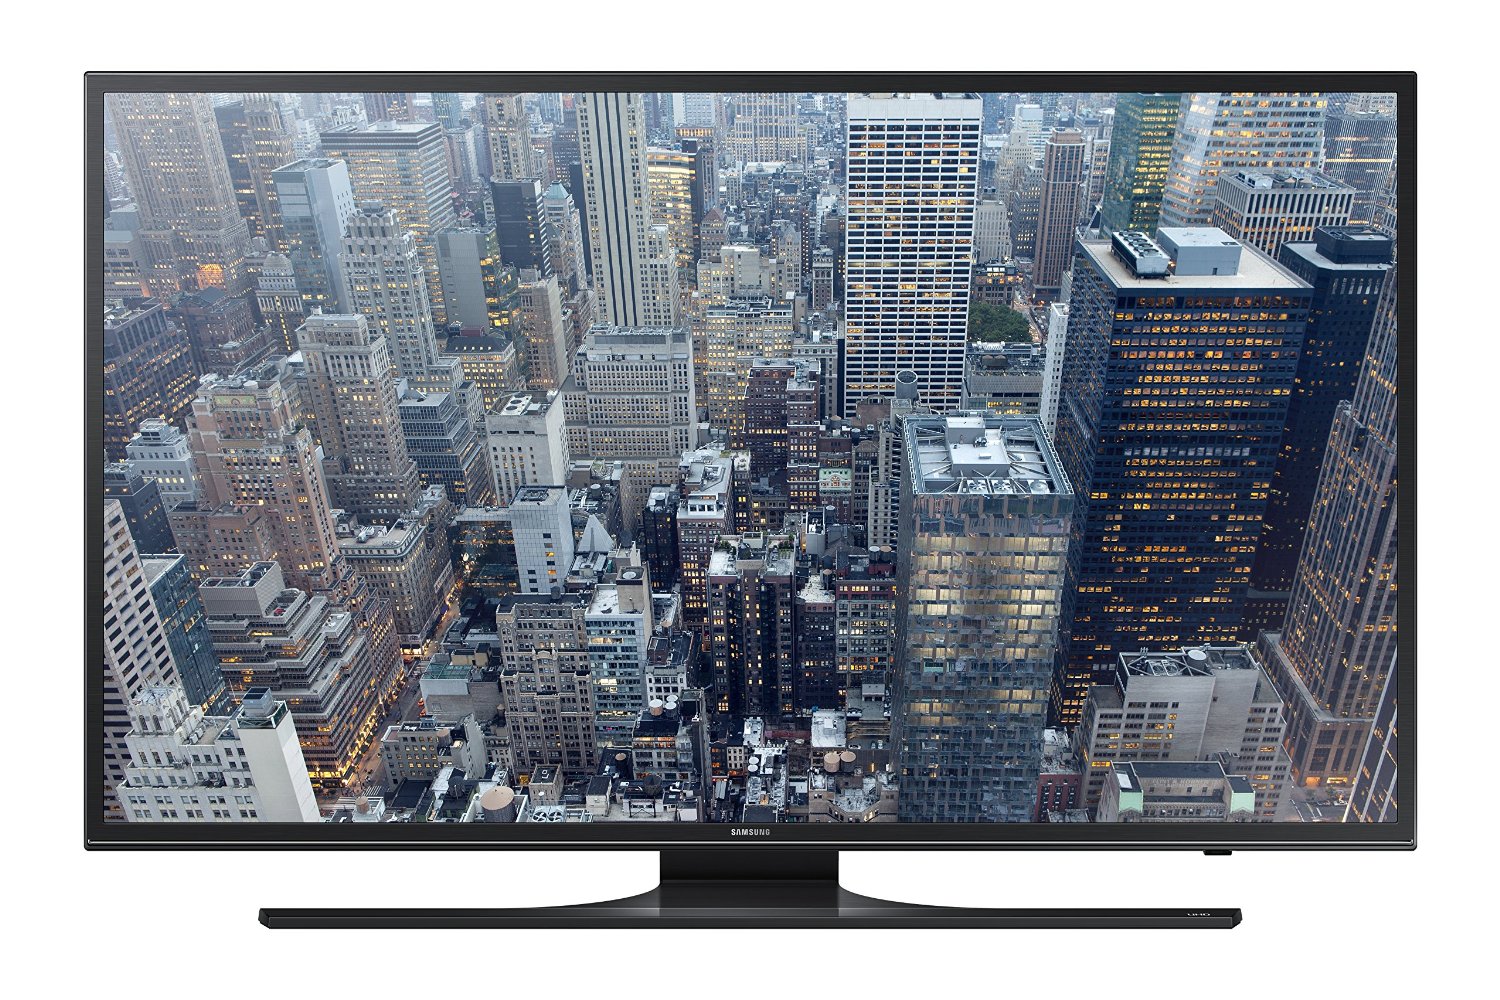 Samsung UN75JU6500 75-Inch 4K Ultra HD Smart LED TV (موديل 2015)